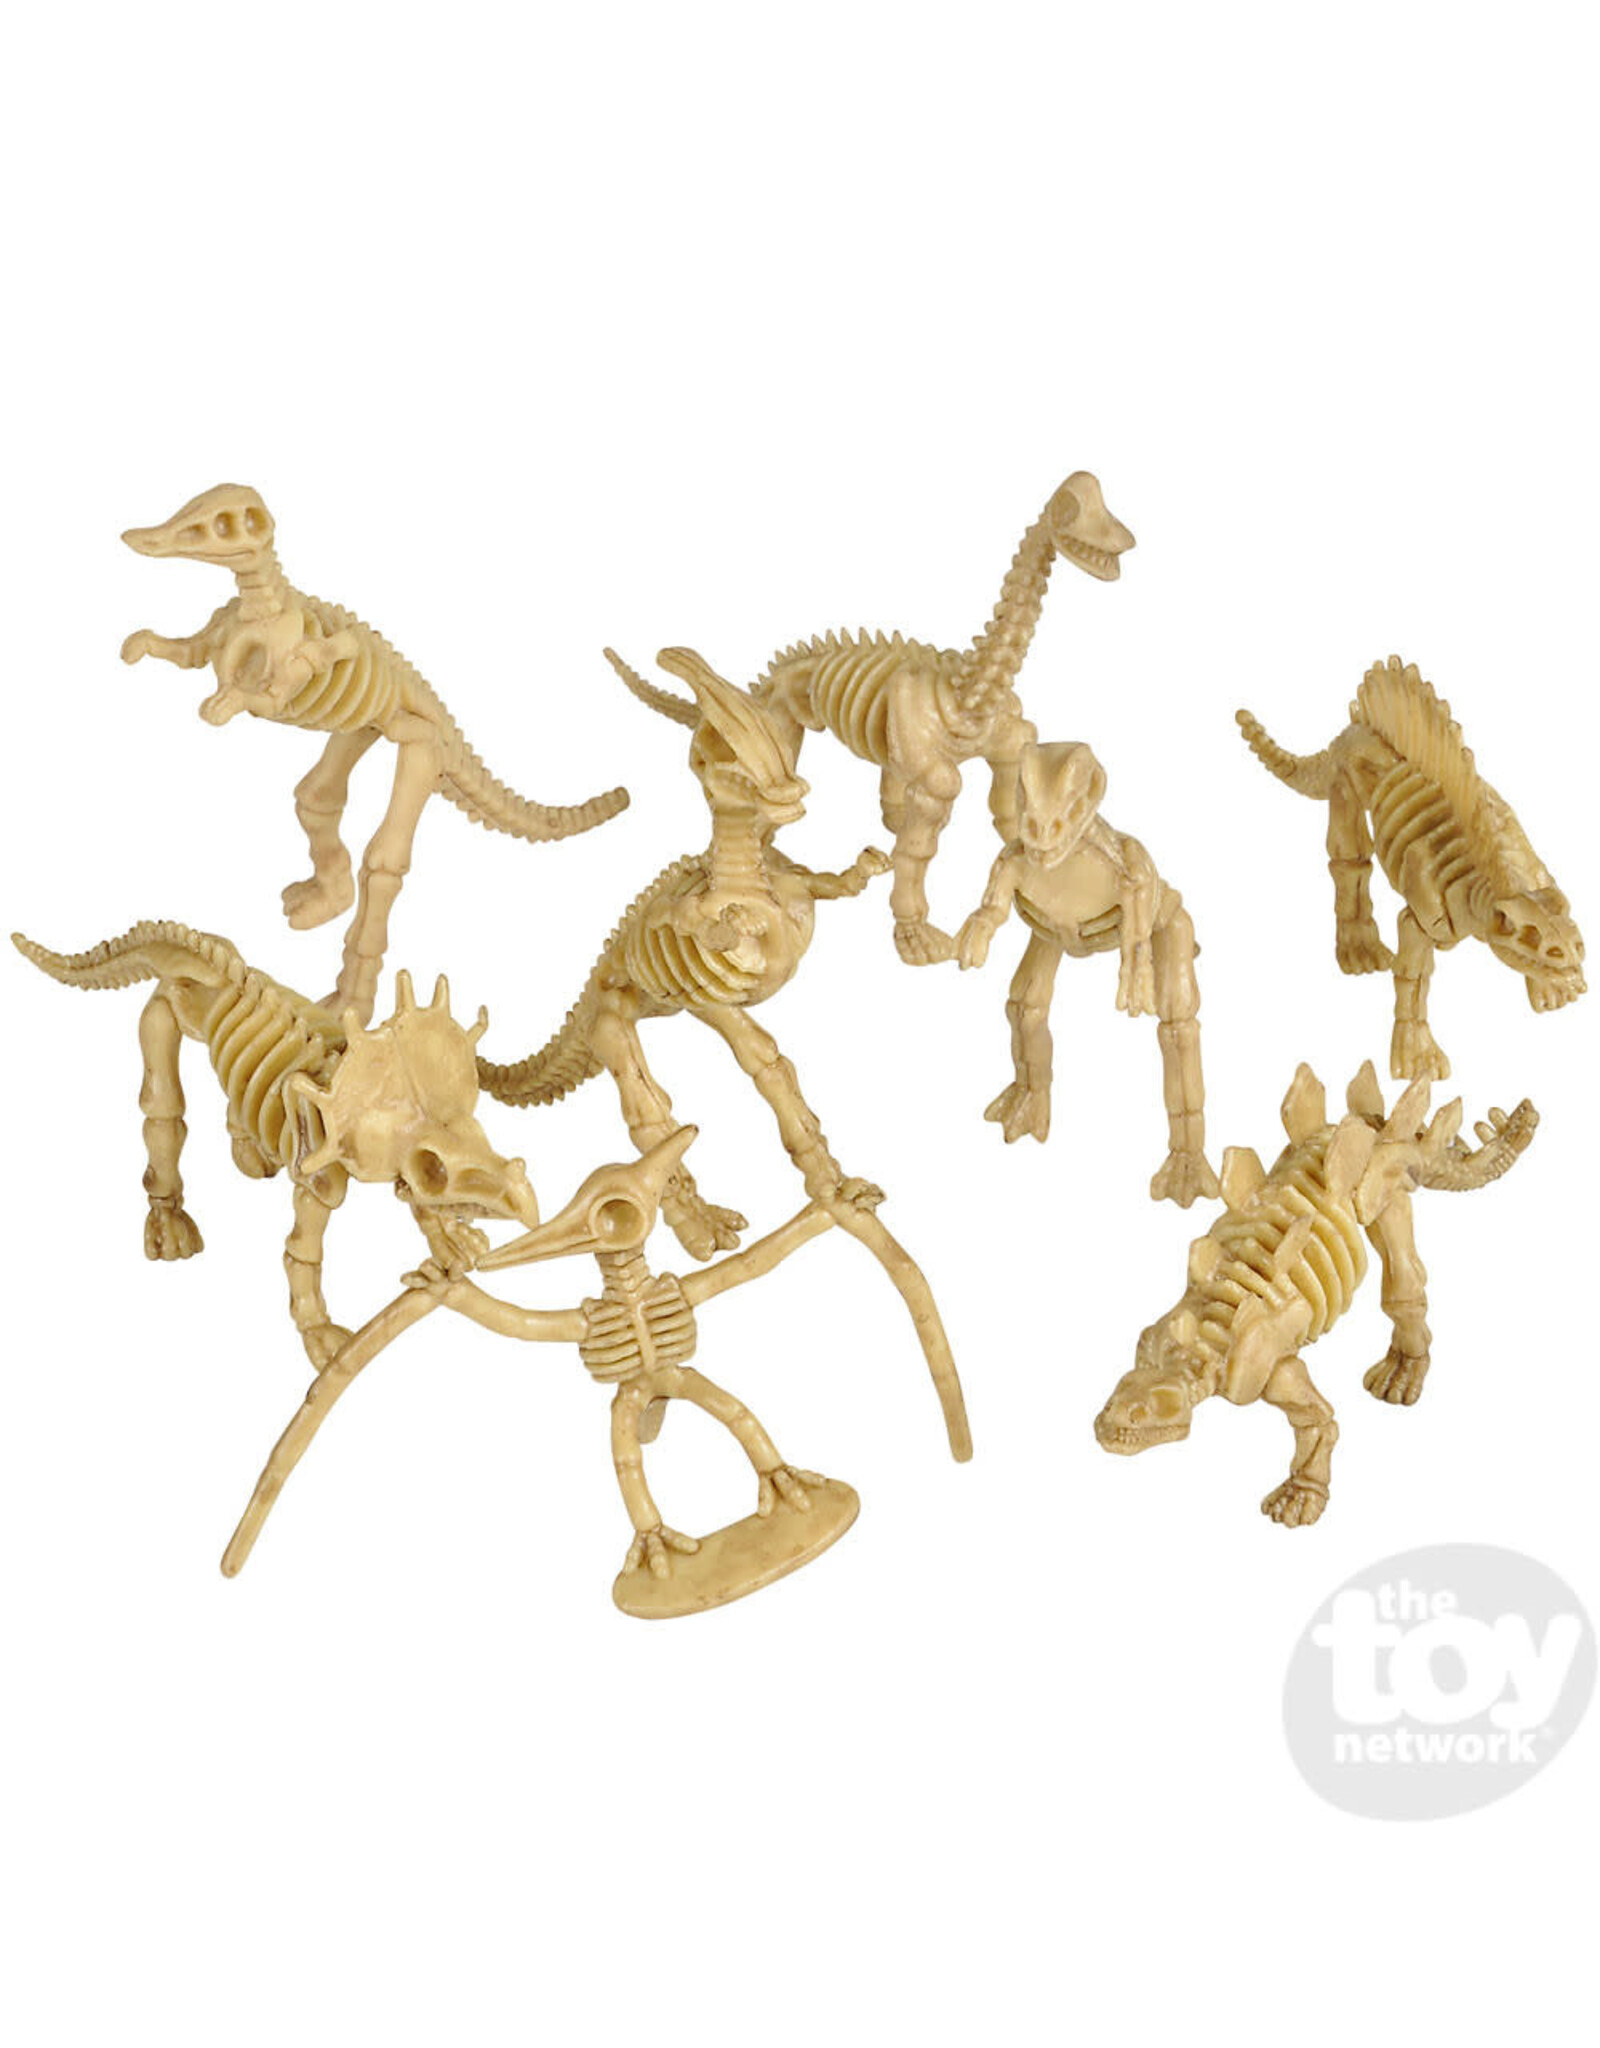 The Toy Network 3.5" Dino Skeleton Figure